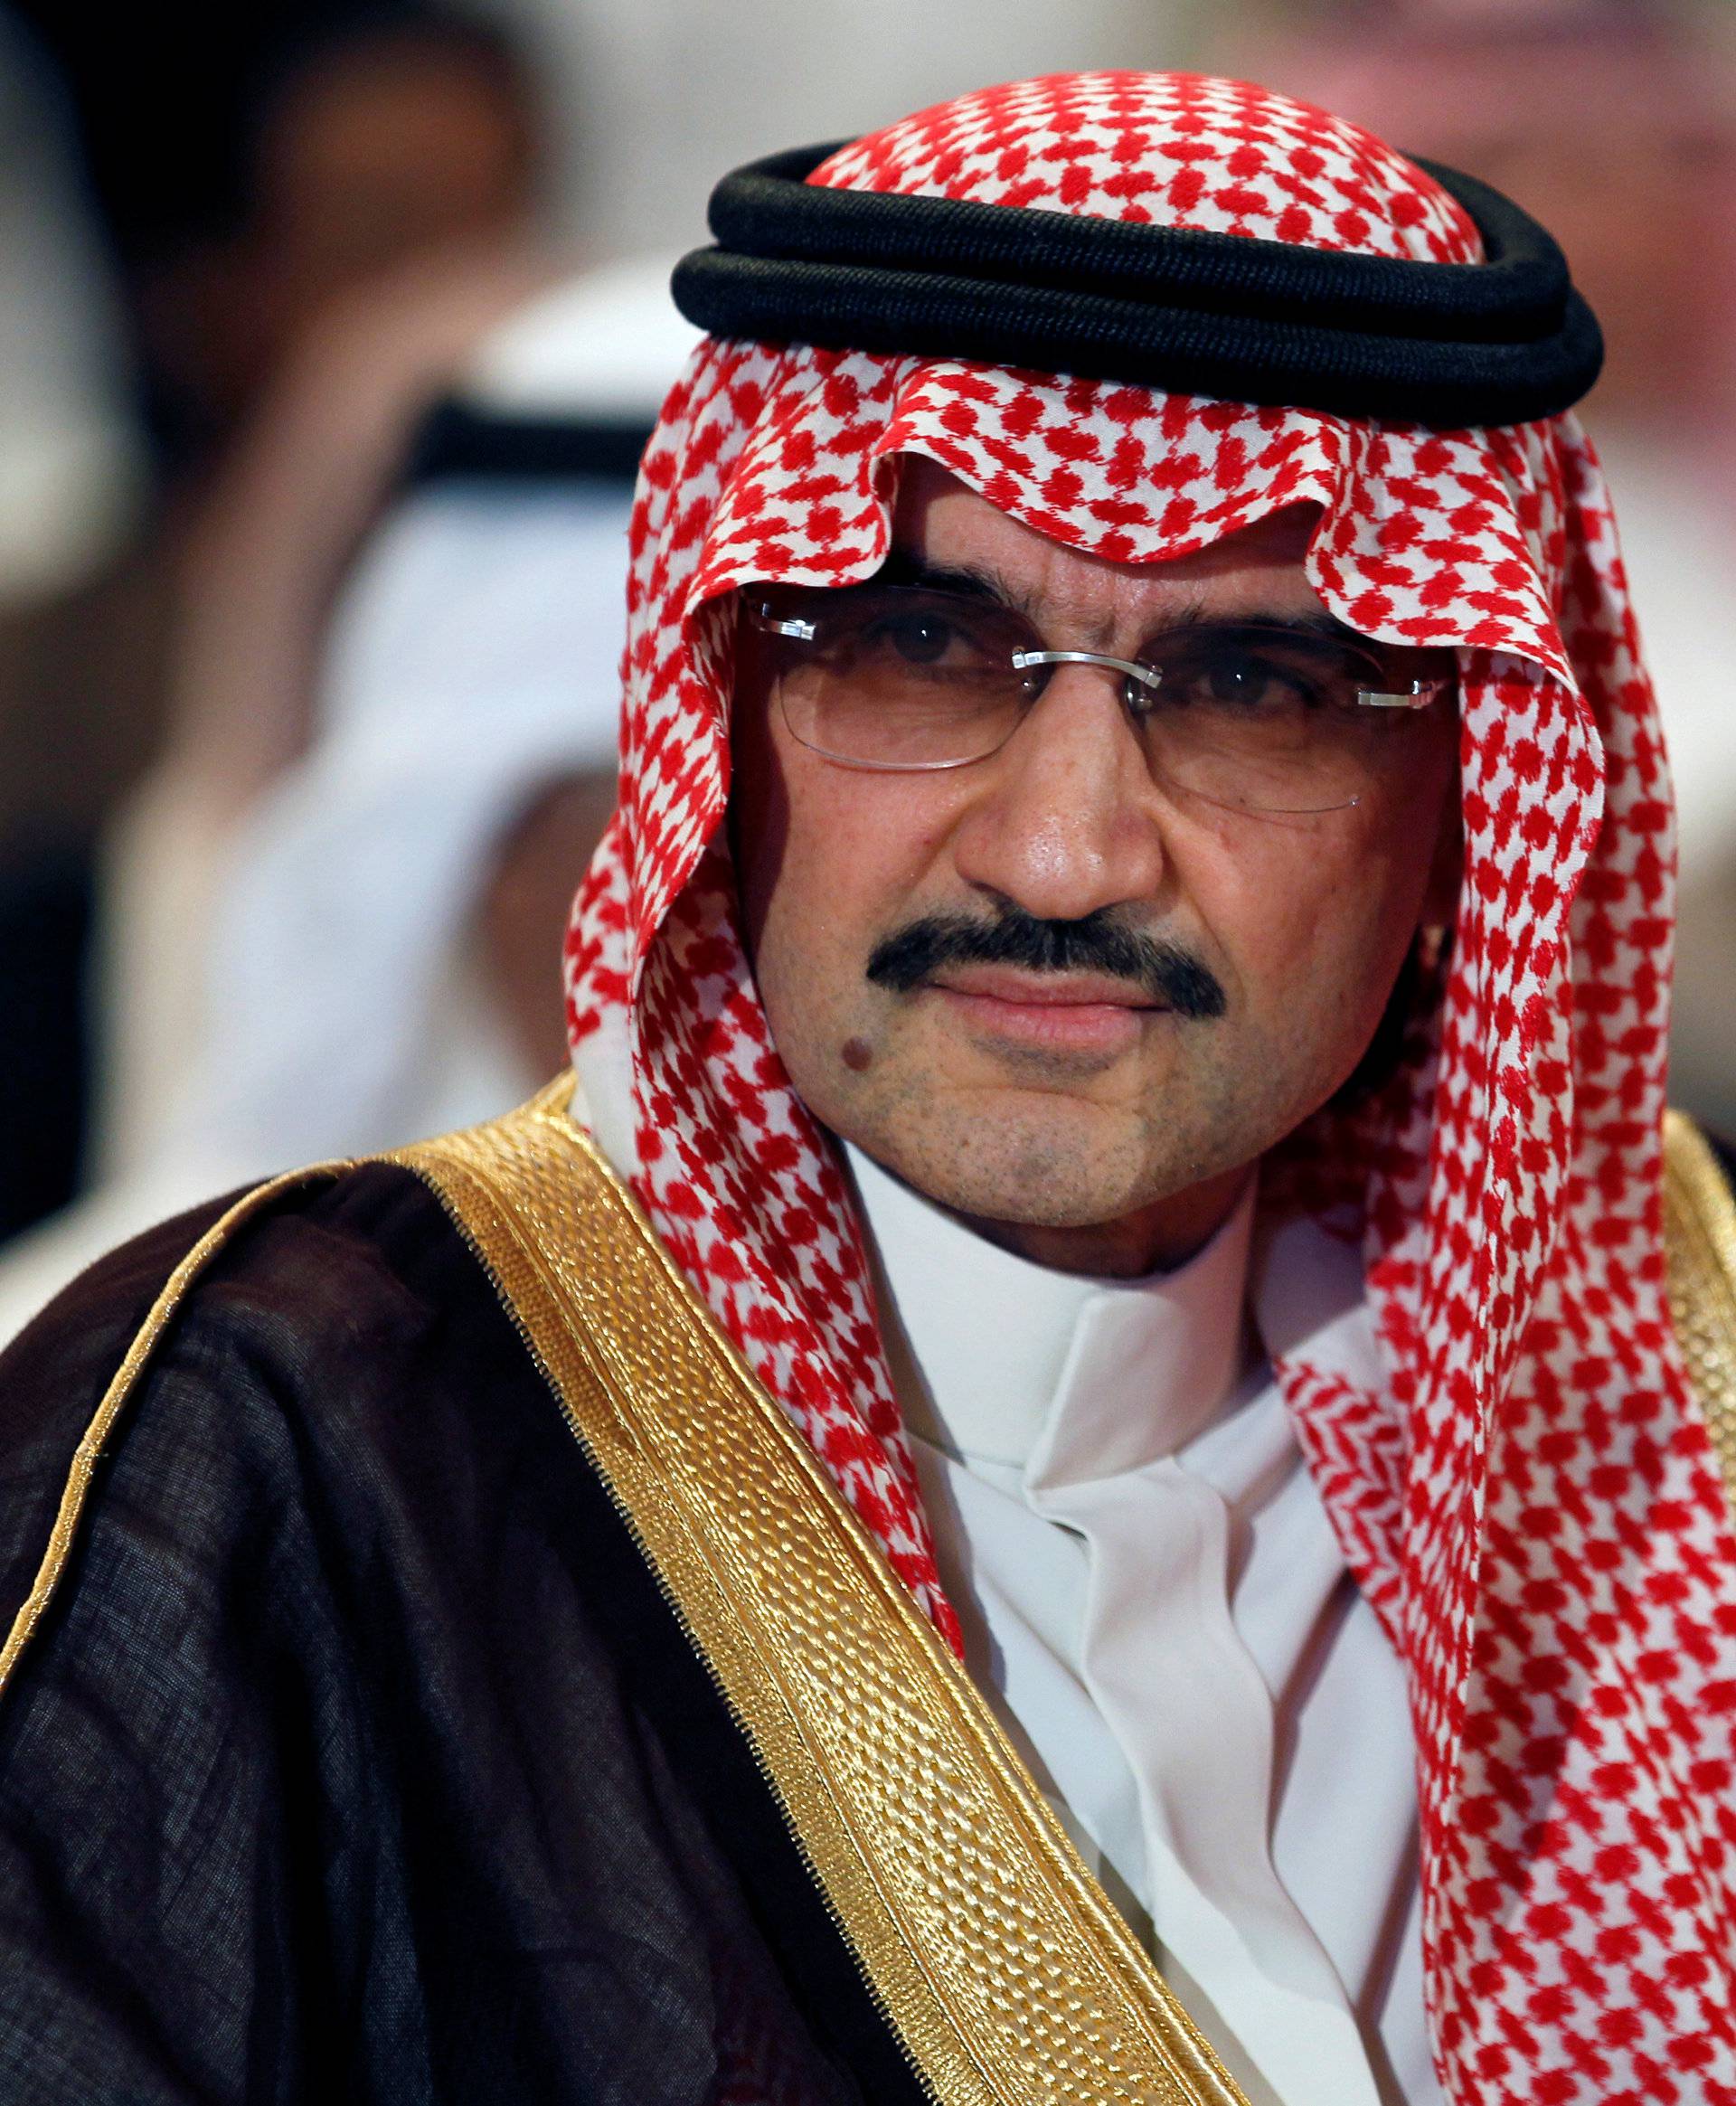 FILE PHOTO - Saudi billionaire Prince AlWaleed bin Talal looks on during a news briefing in Manama